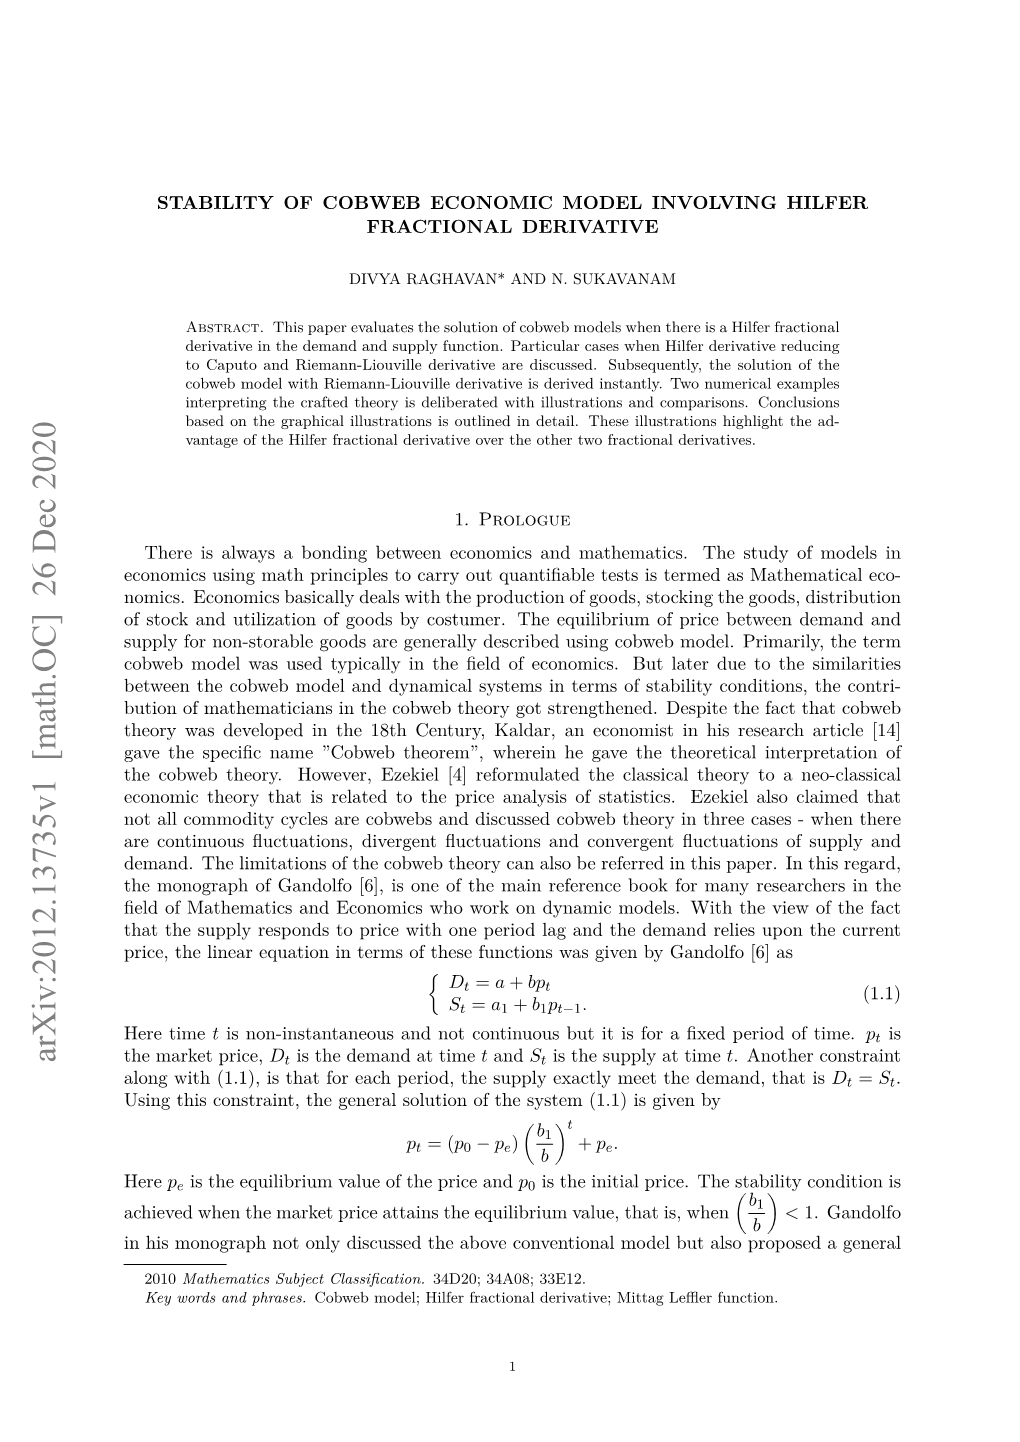 Stability of Cobweb Economic Model Involving Hilfer Fractional Derivative